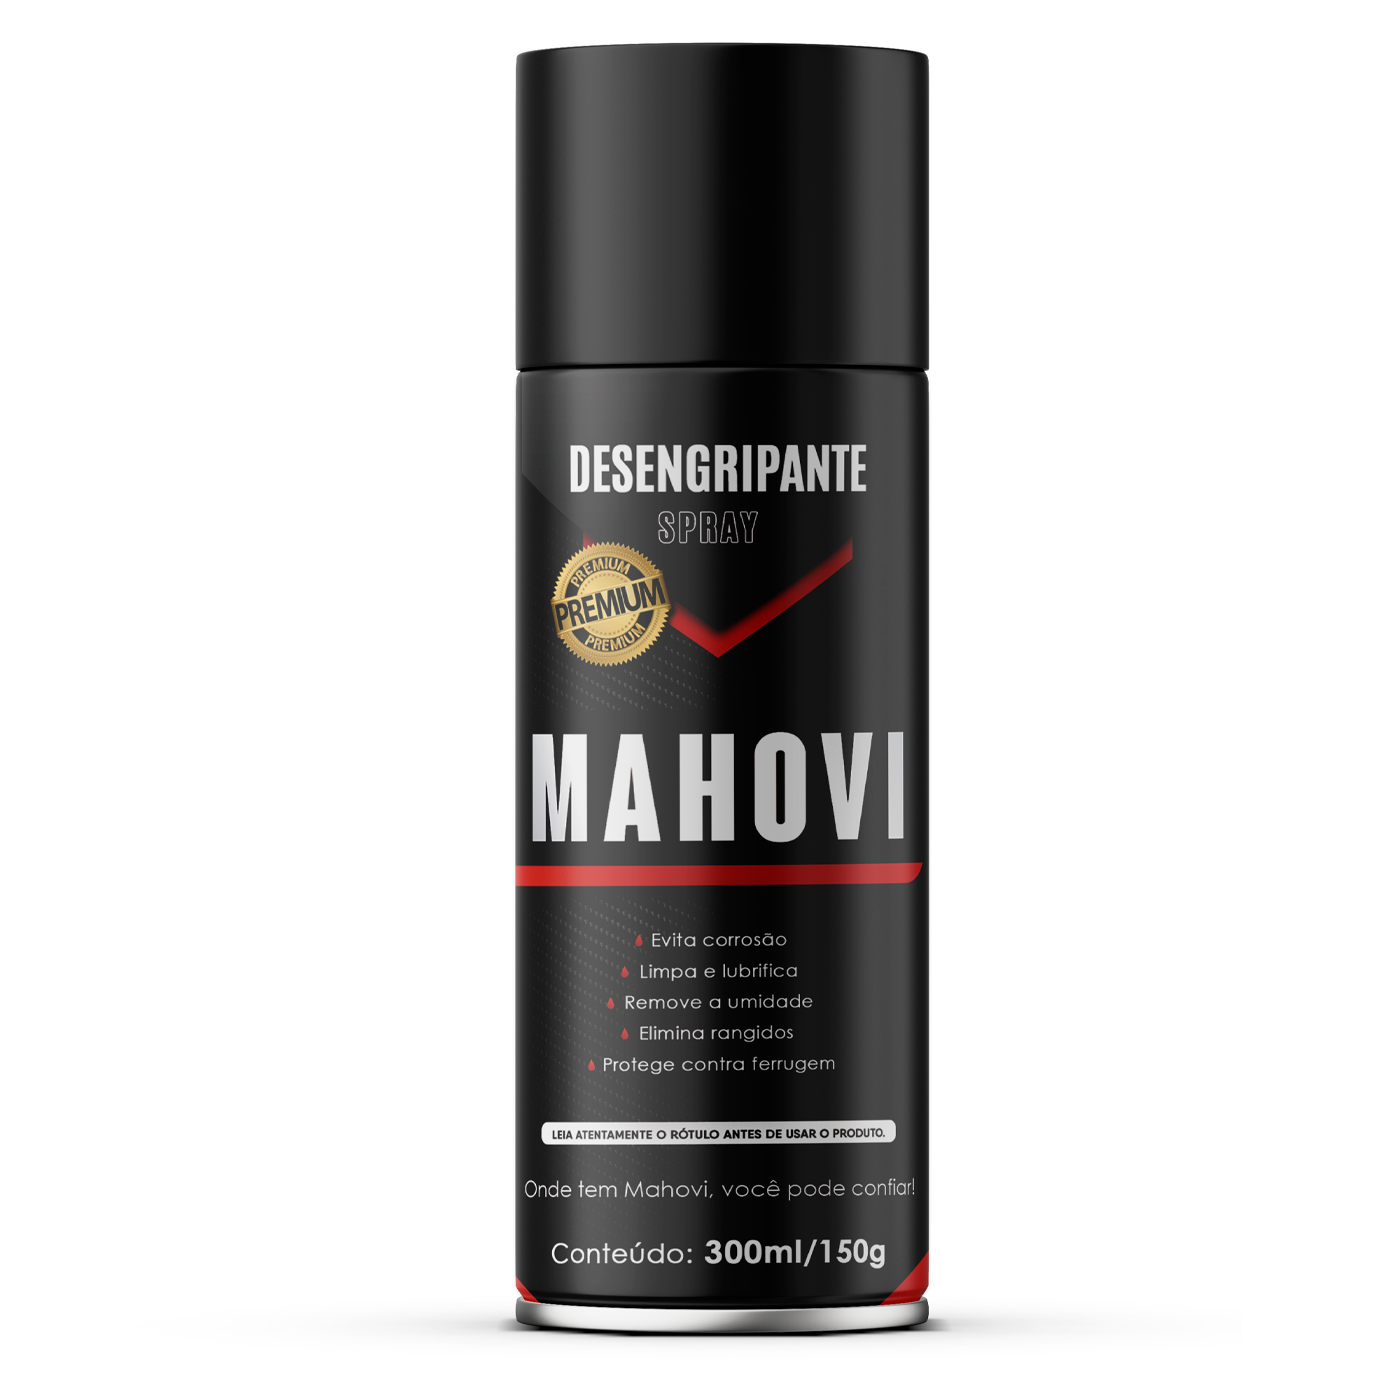 Desengripante Spray – DES-001